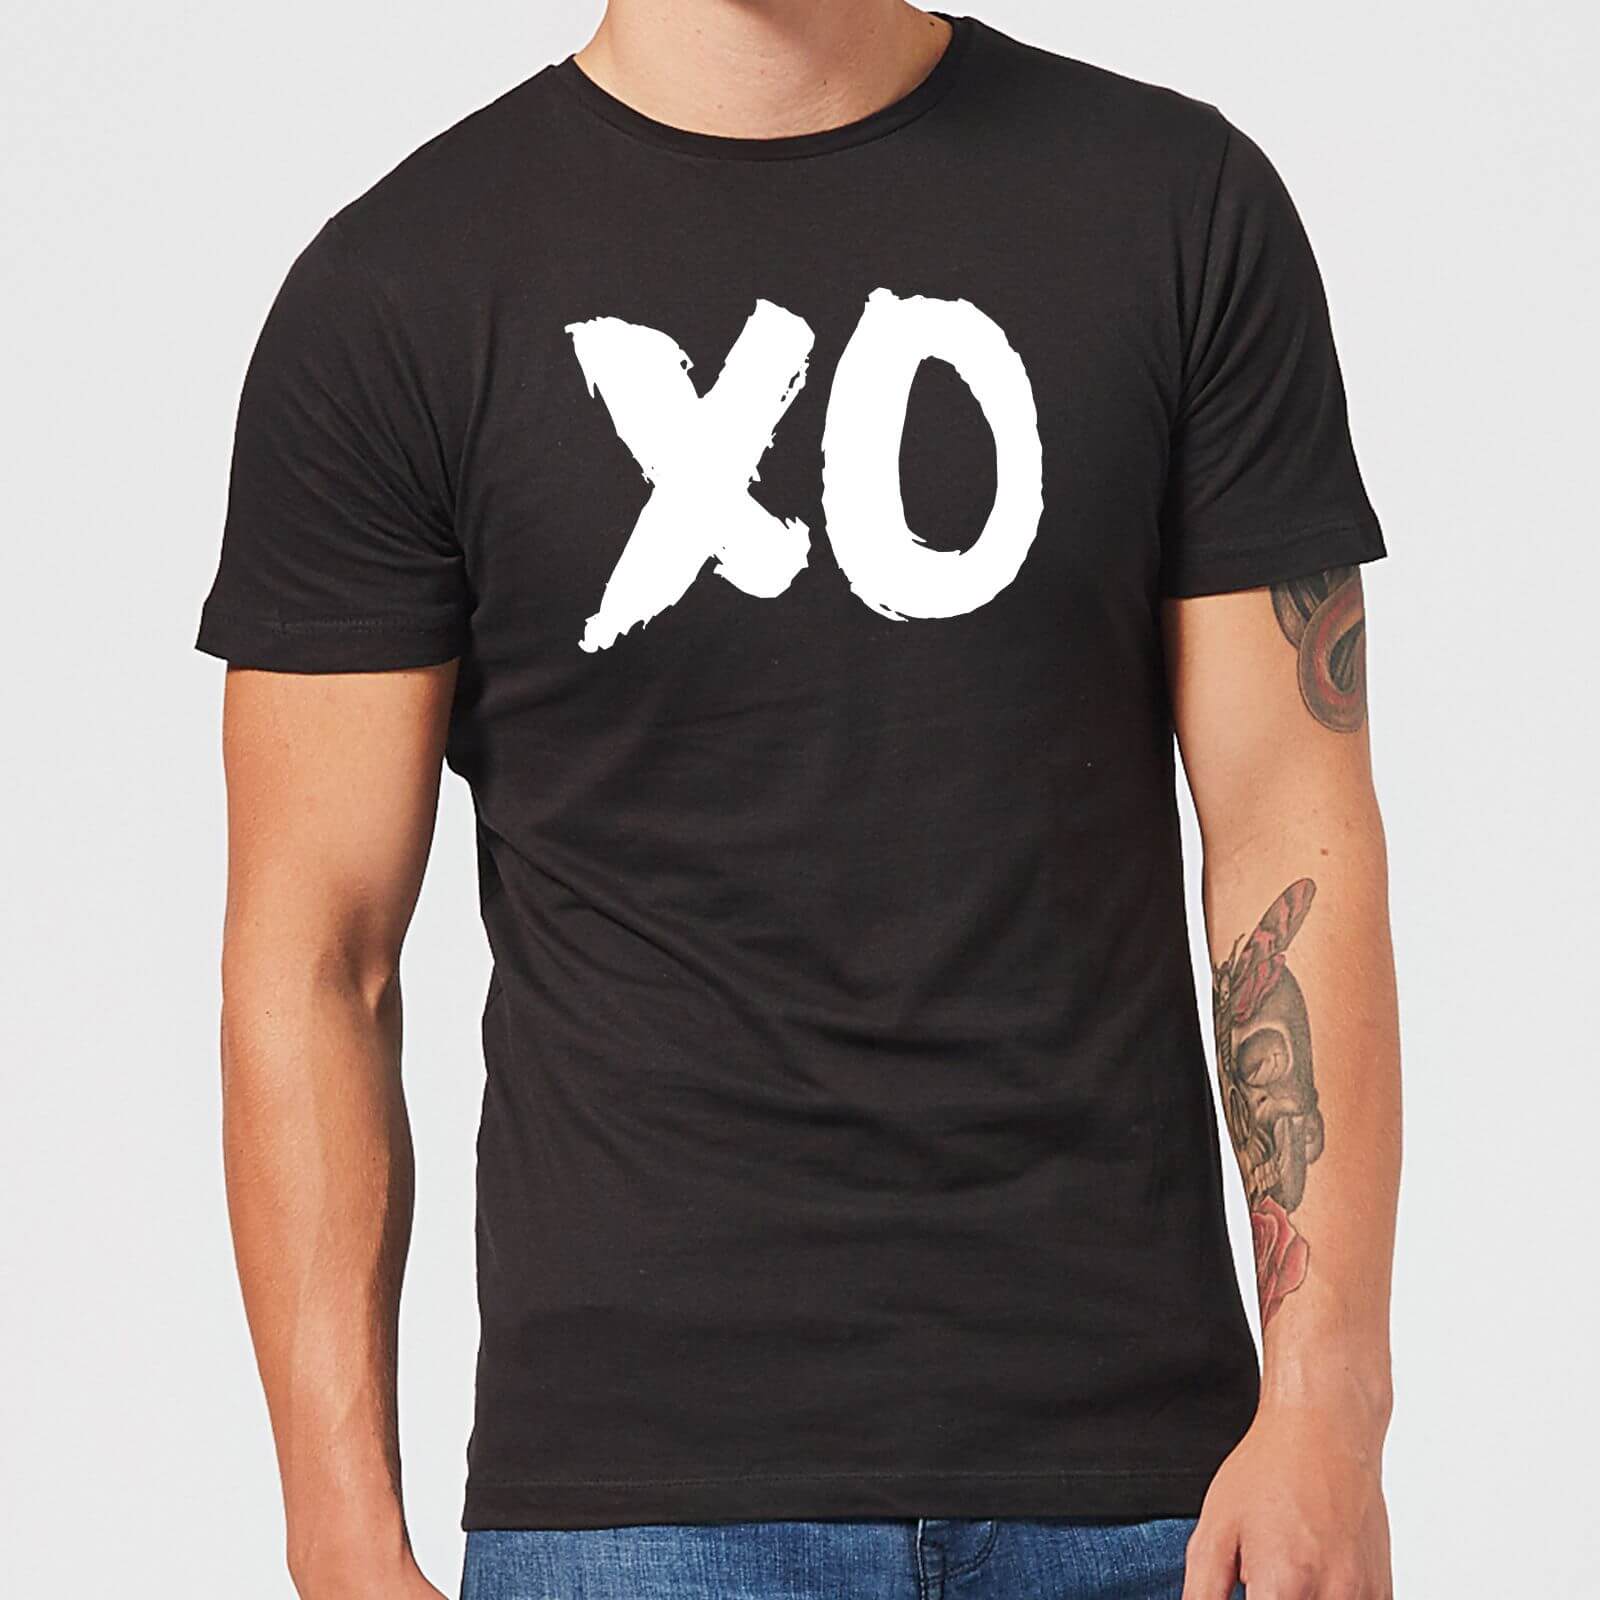 The Motivated Type XO Men's T-Shirt - Black - S - Black